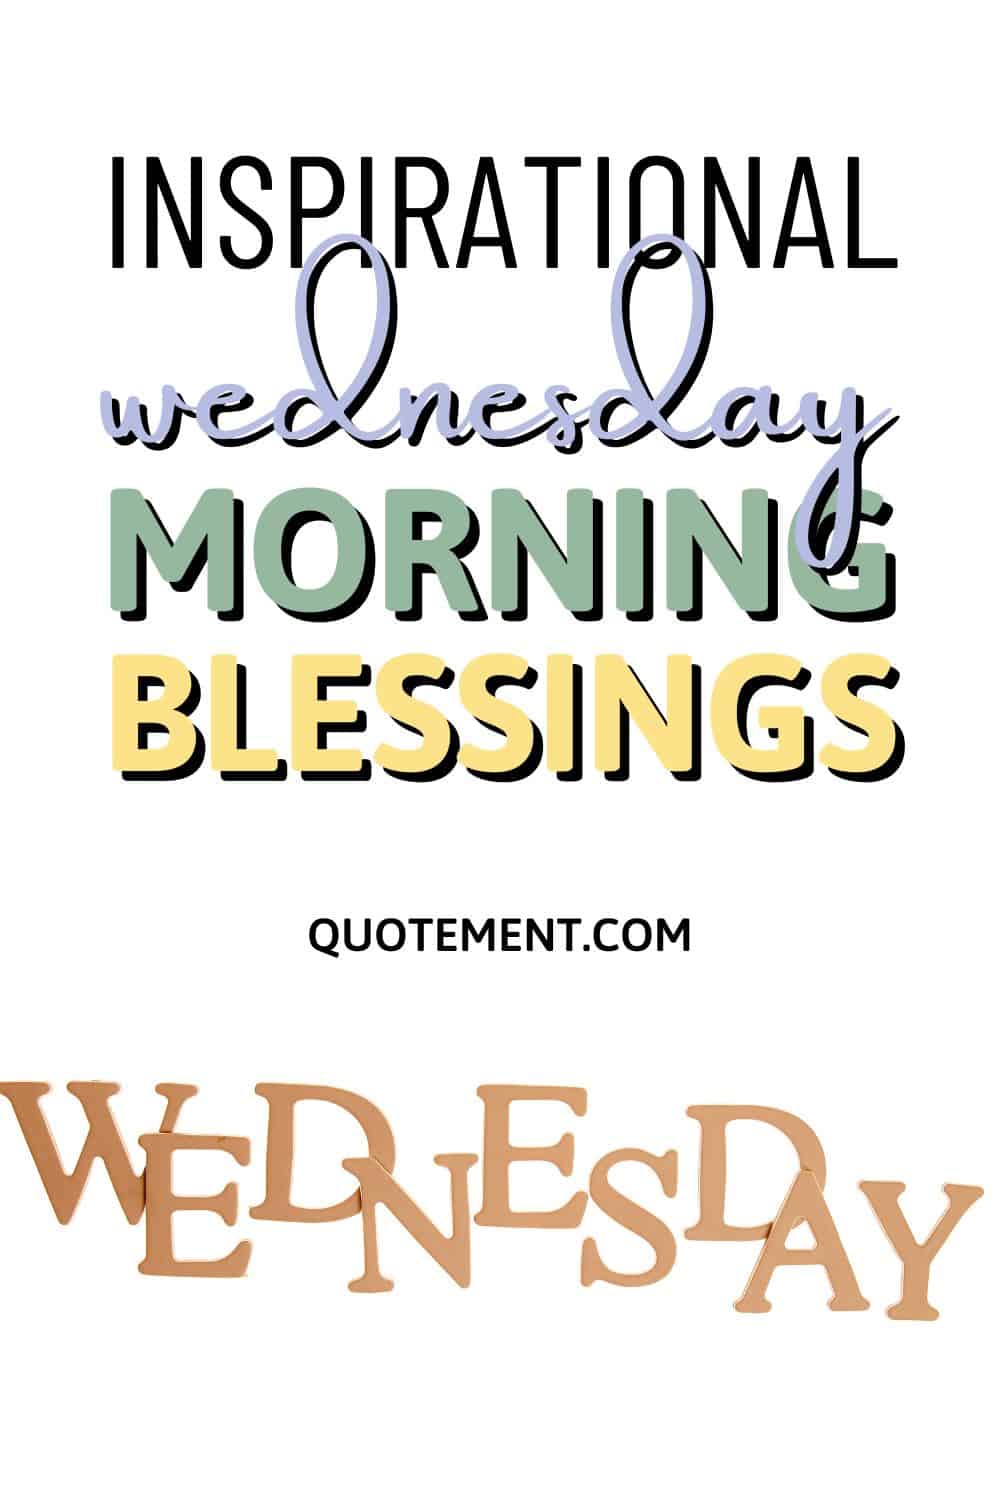 120 Inspiring Wednesday Morning Blessings To Motivate You